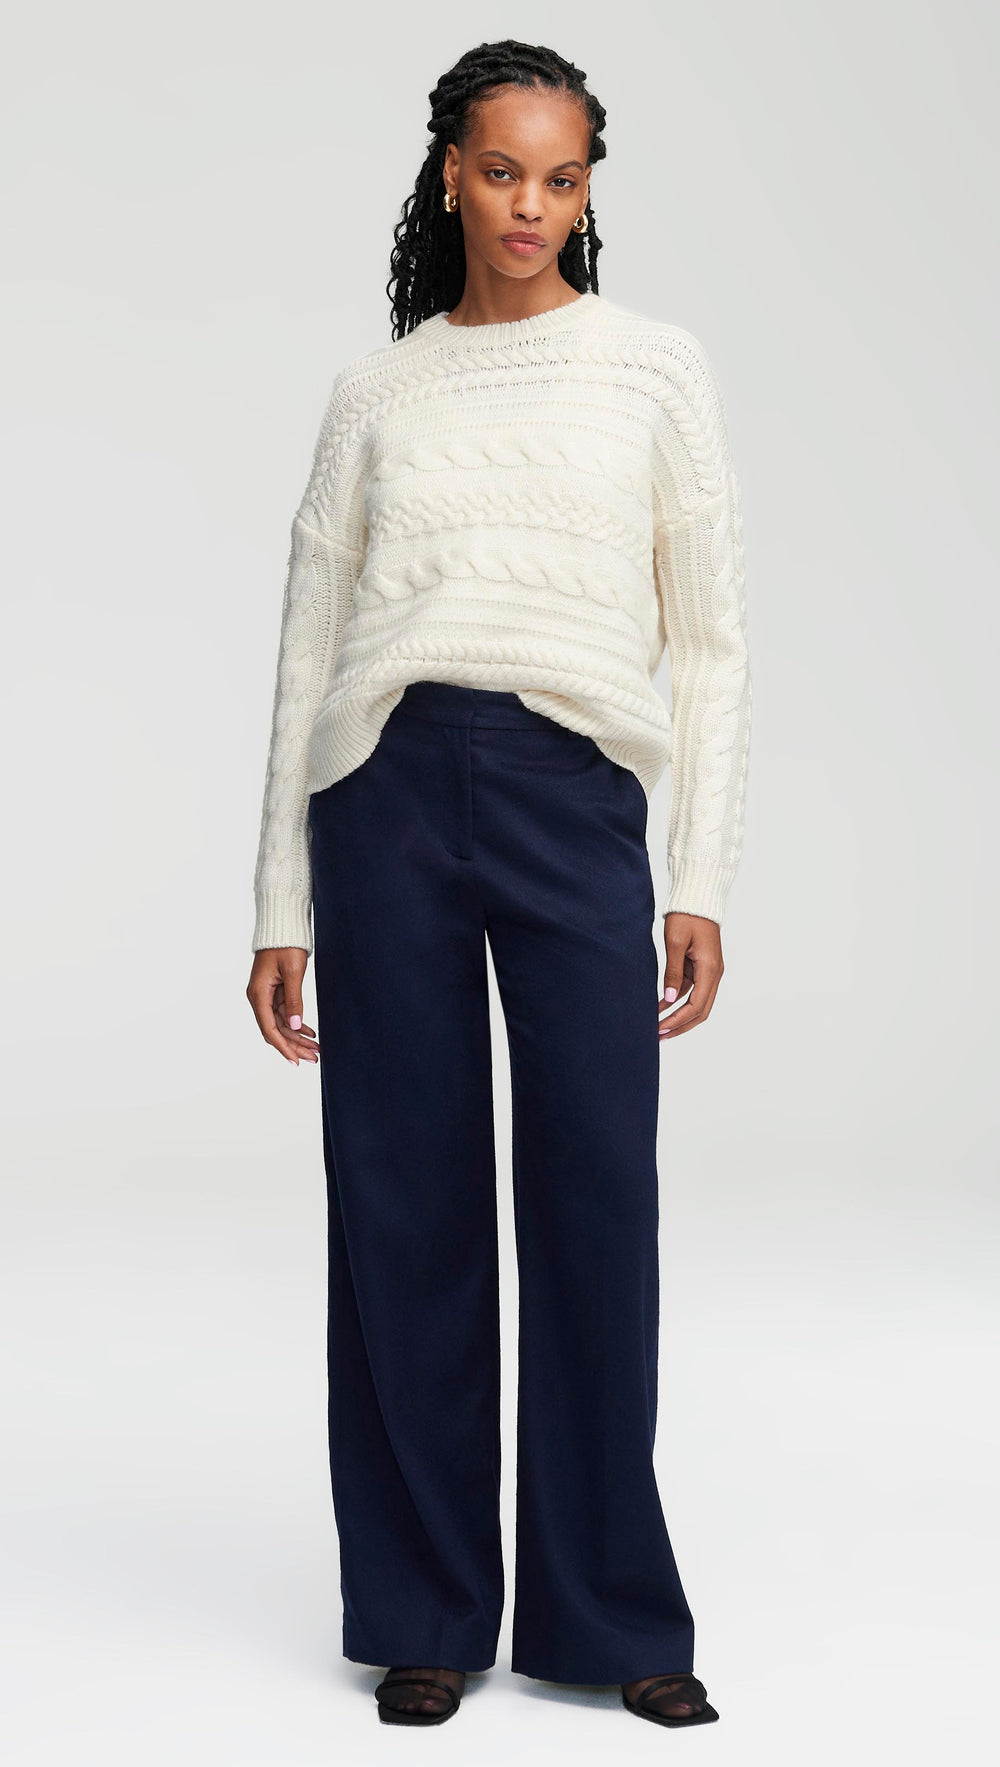 Chunky Crop Cable Sweater in Merino Wool, Women's Sweaters